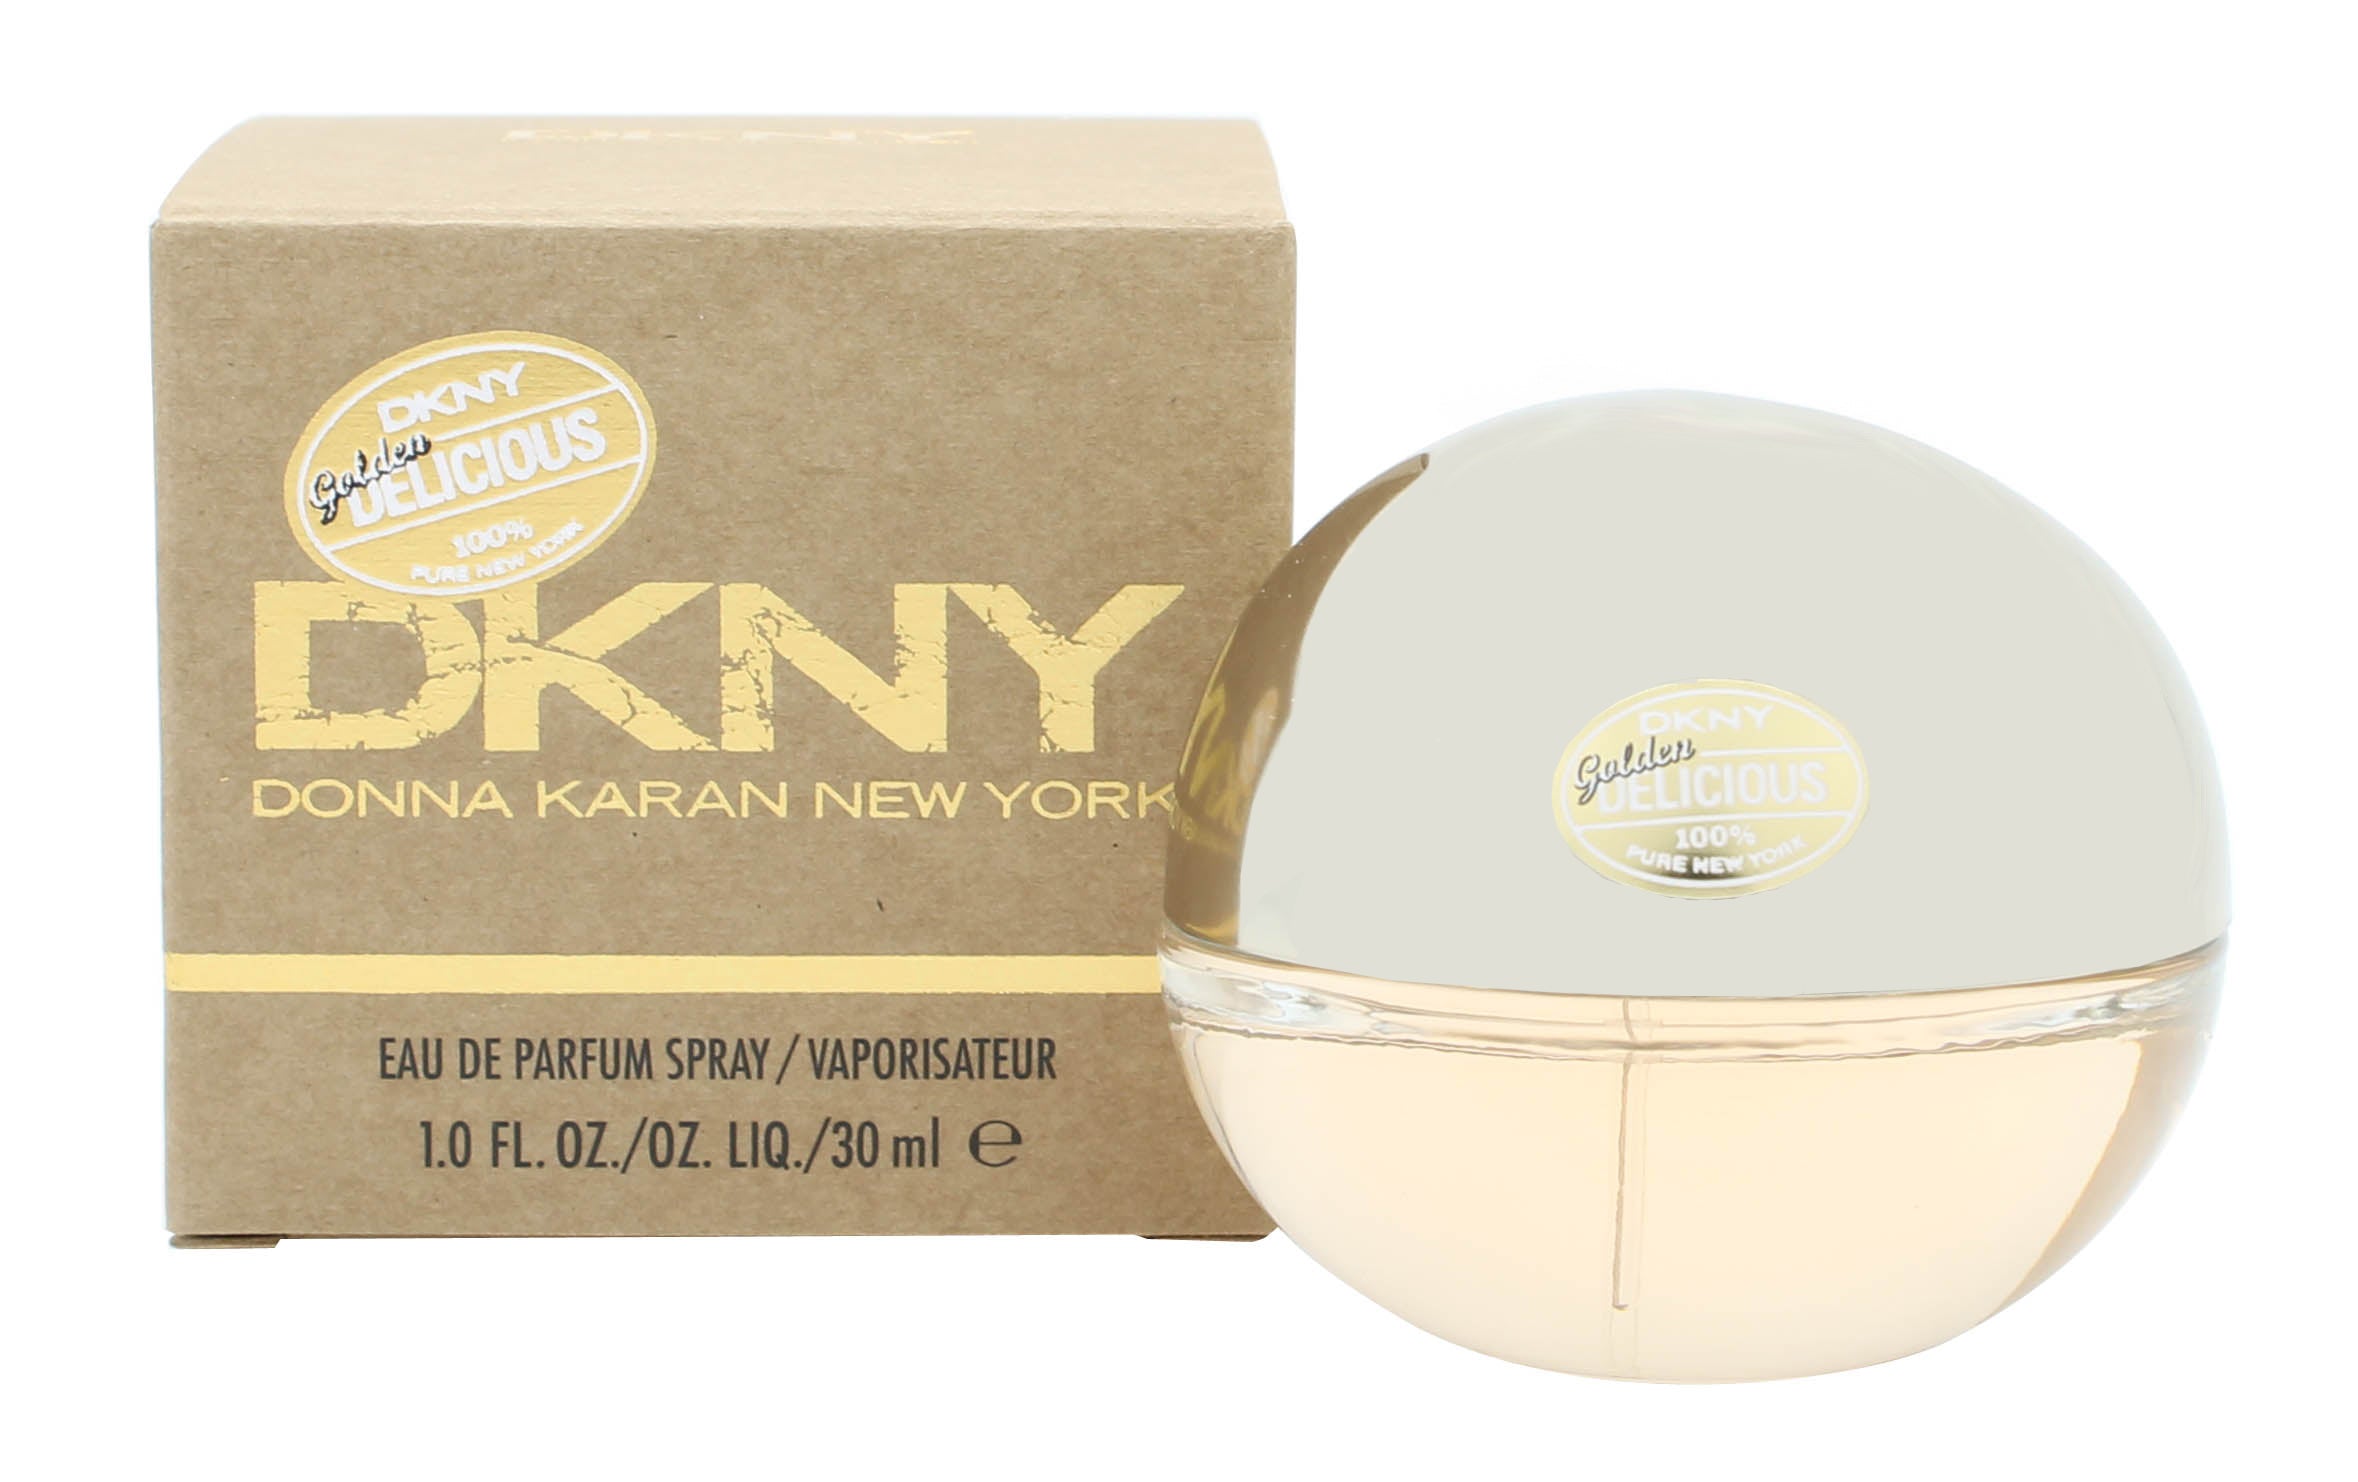 View DKNY Golden Delicious Eau de Parfum 30ml Spray information